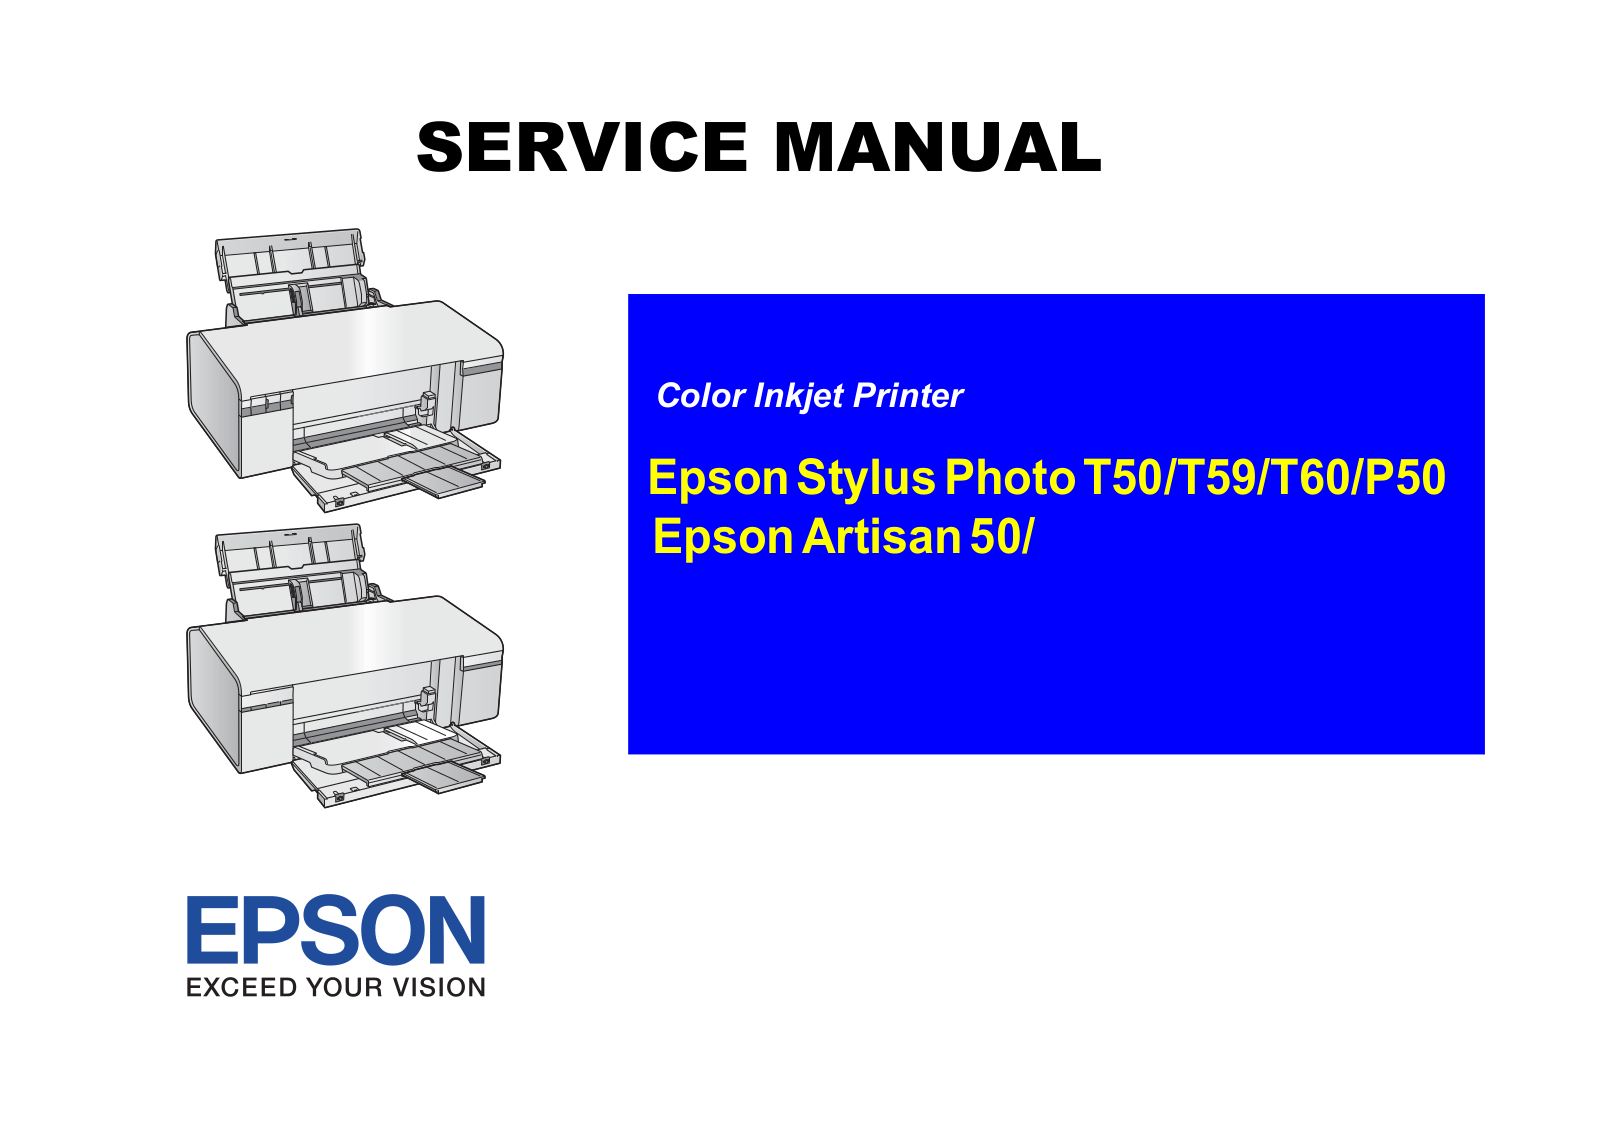 Epson Stylus Photo T50, Stylus Photo T59, Stylus Photo T60, Stylus Photo P50, Artisan 50 Service Manual